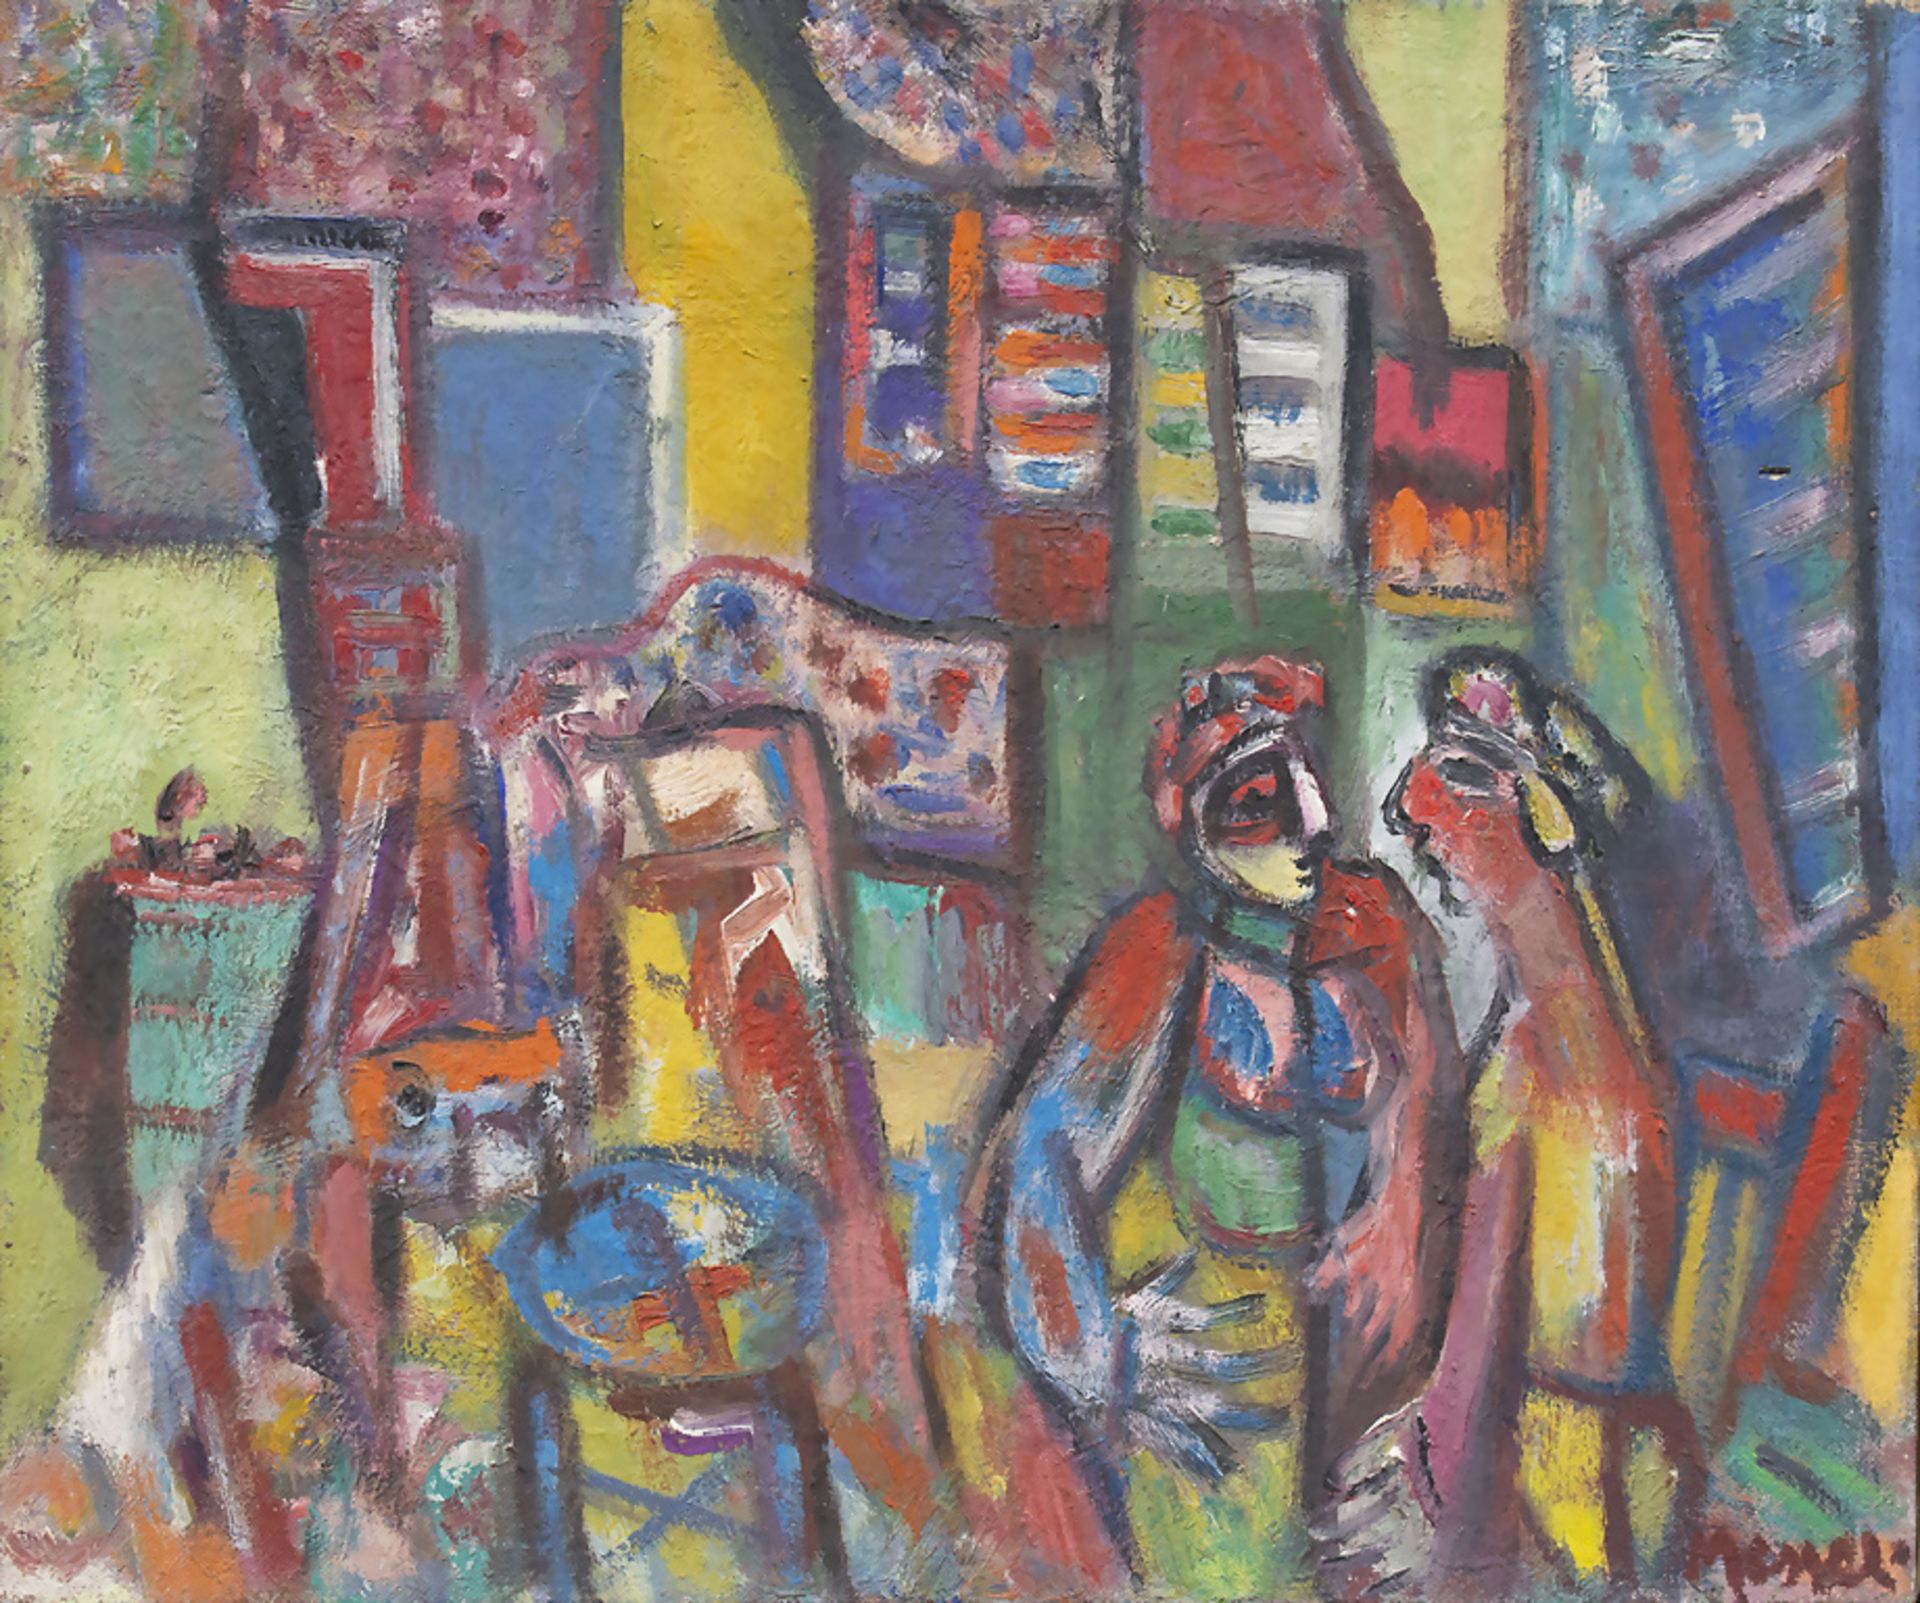 David MESSER (1912-1998), 'Wohnraum mit Paar' / 'Living room with couple', 1965